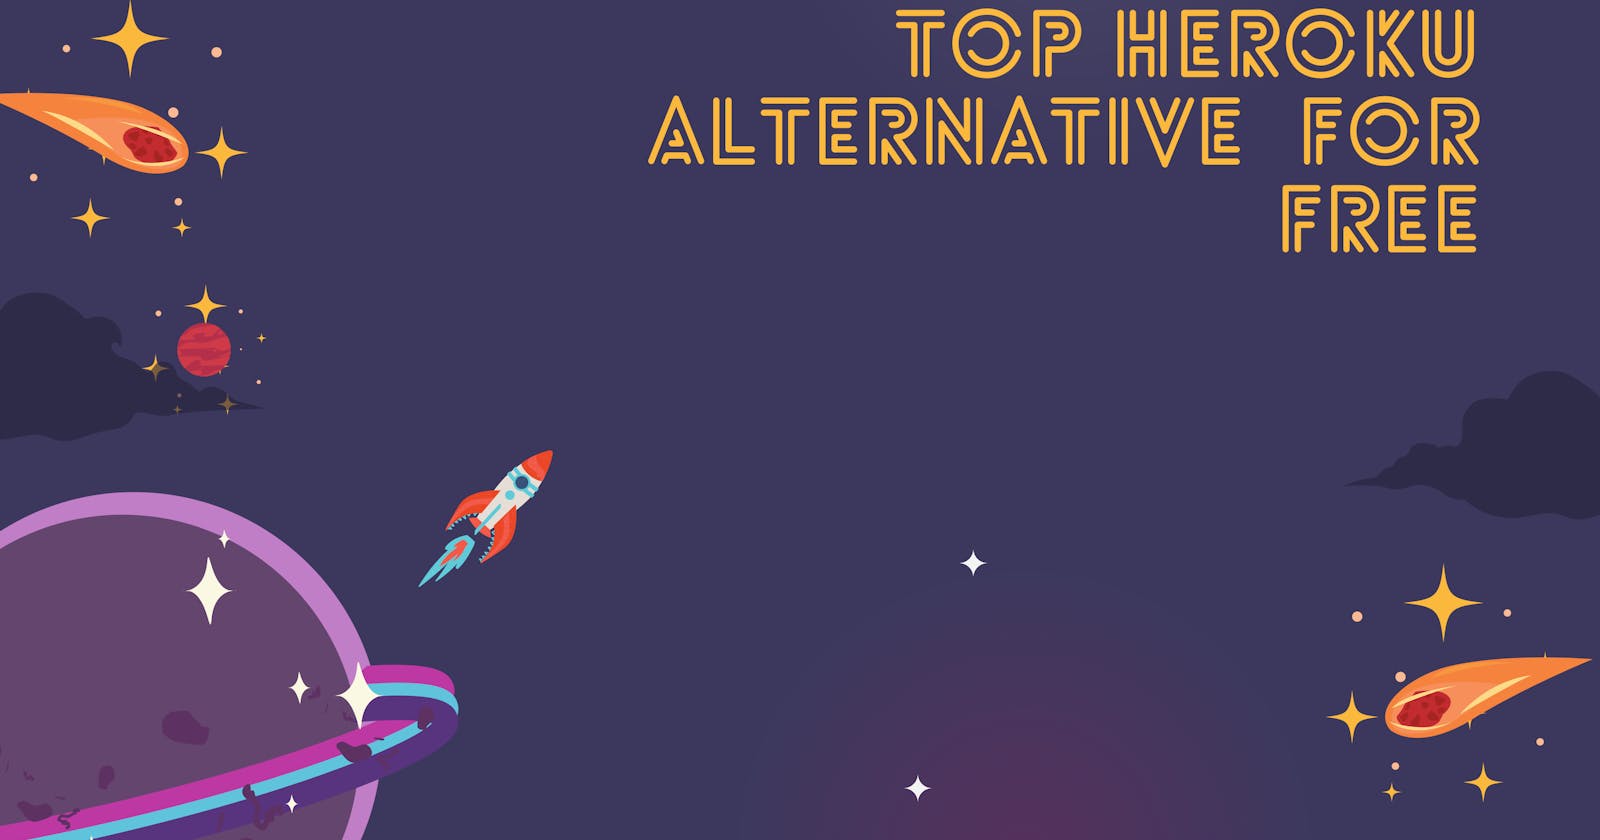 Top Heroku Alternatives for free.